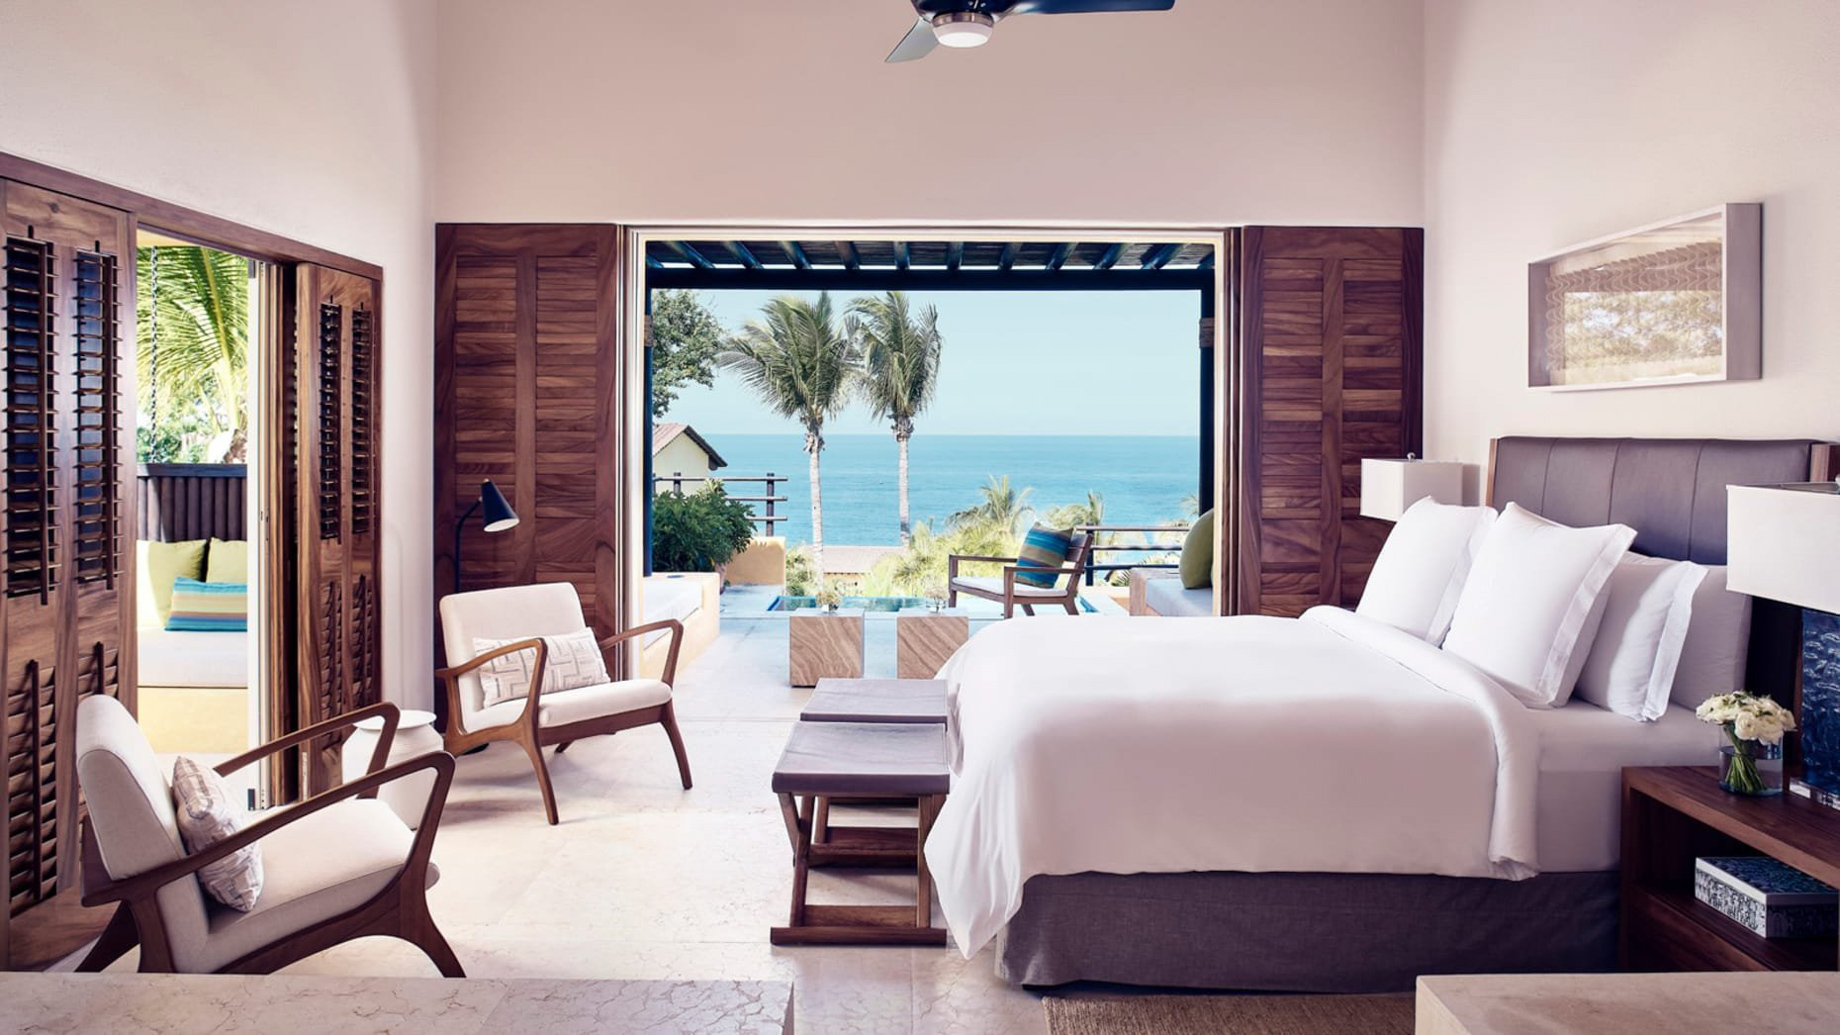 Four Seasons Resort Punta Mita - Nayarit, Mexico - Verano Ocean View Villa Master Bedroom